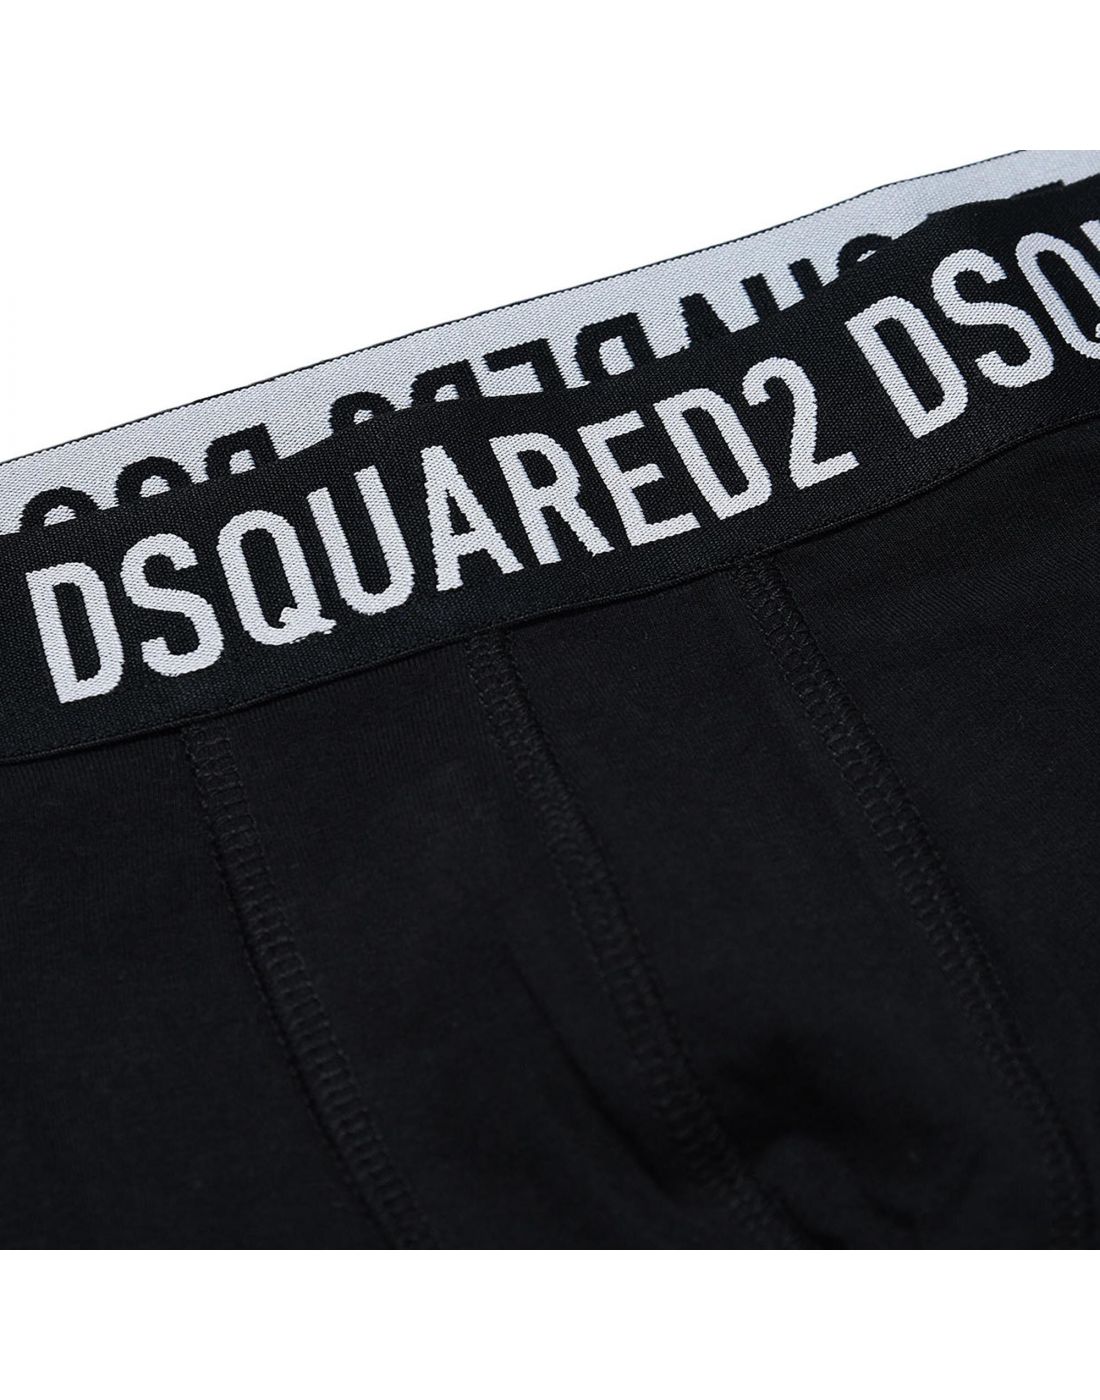 Dsquared2 Boys Underwear 2 pcs